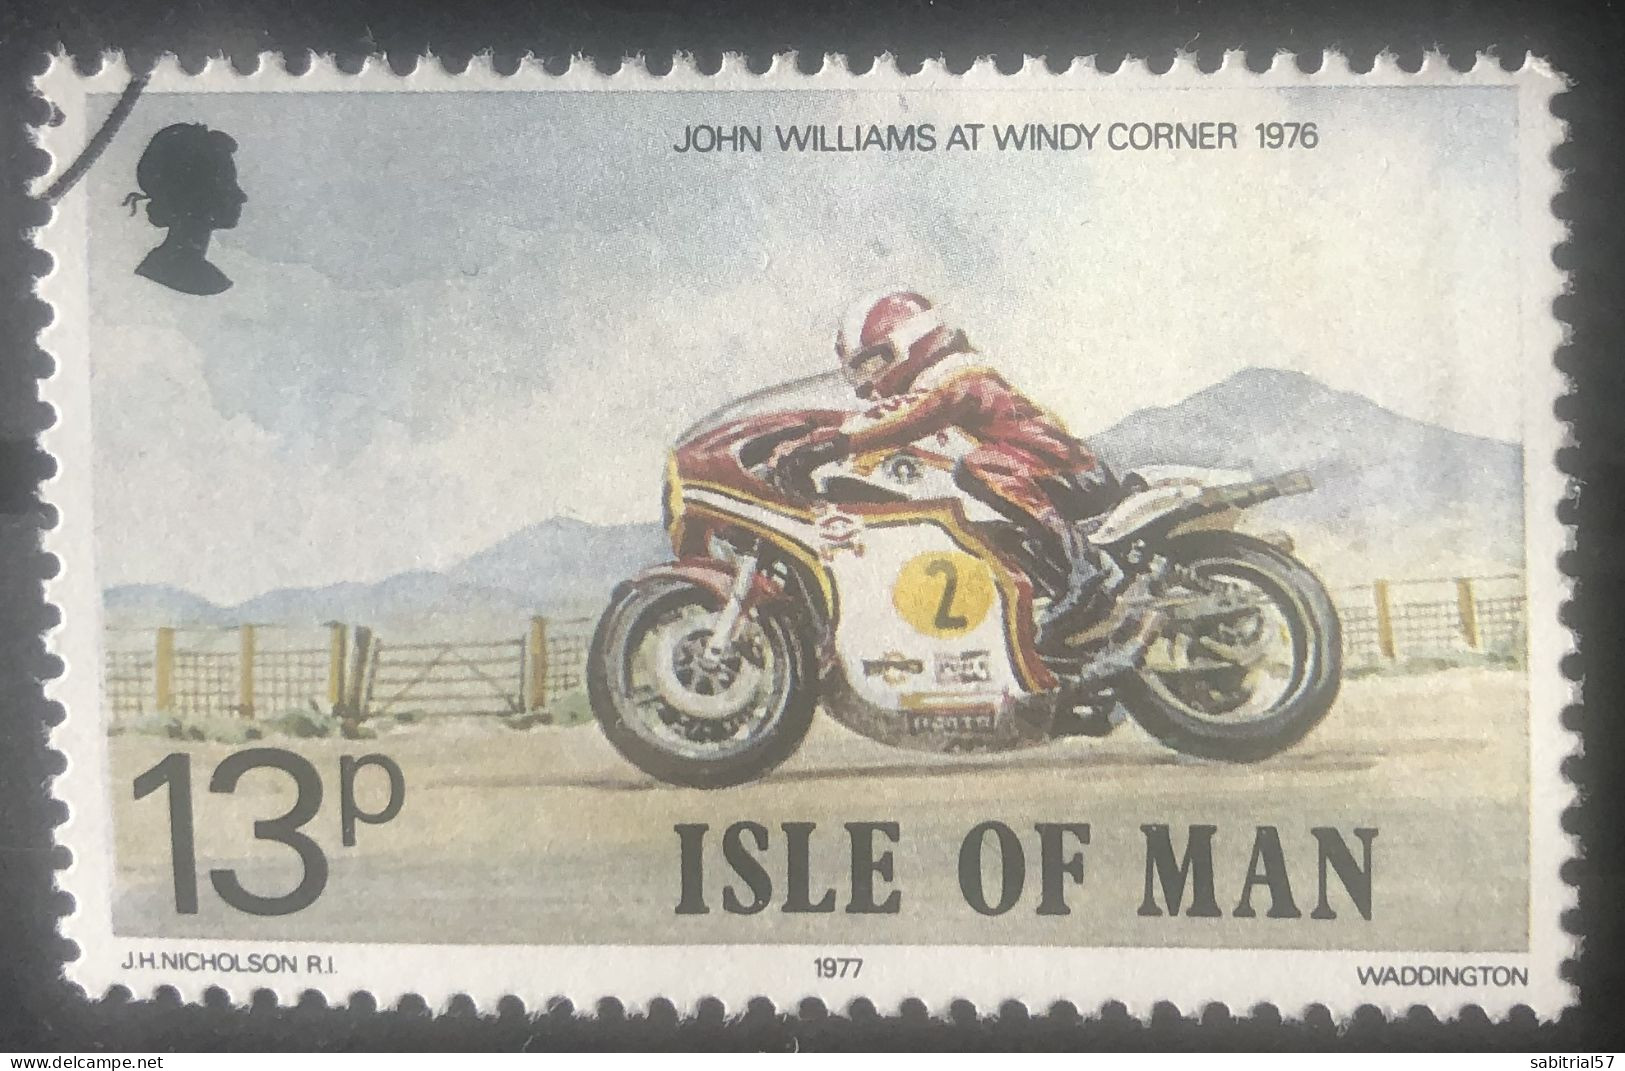 TT Isle Of Man / 1977 / John Williams At Windy Corner / Used - Used Stamps